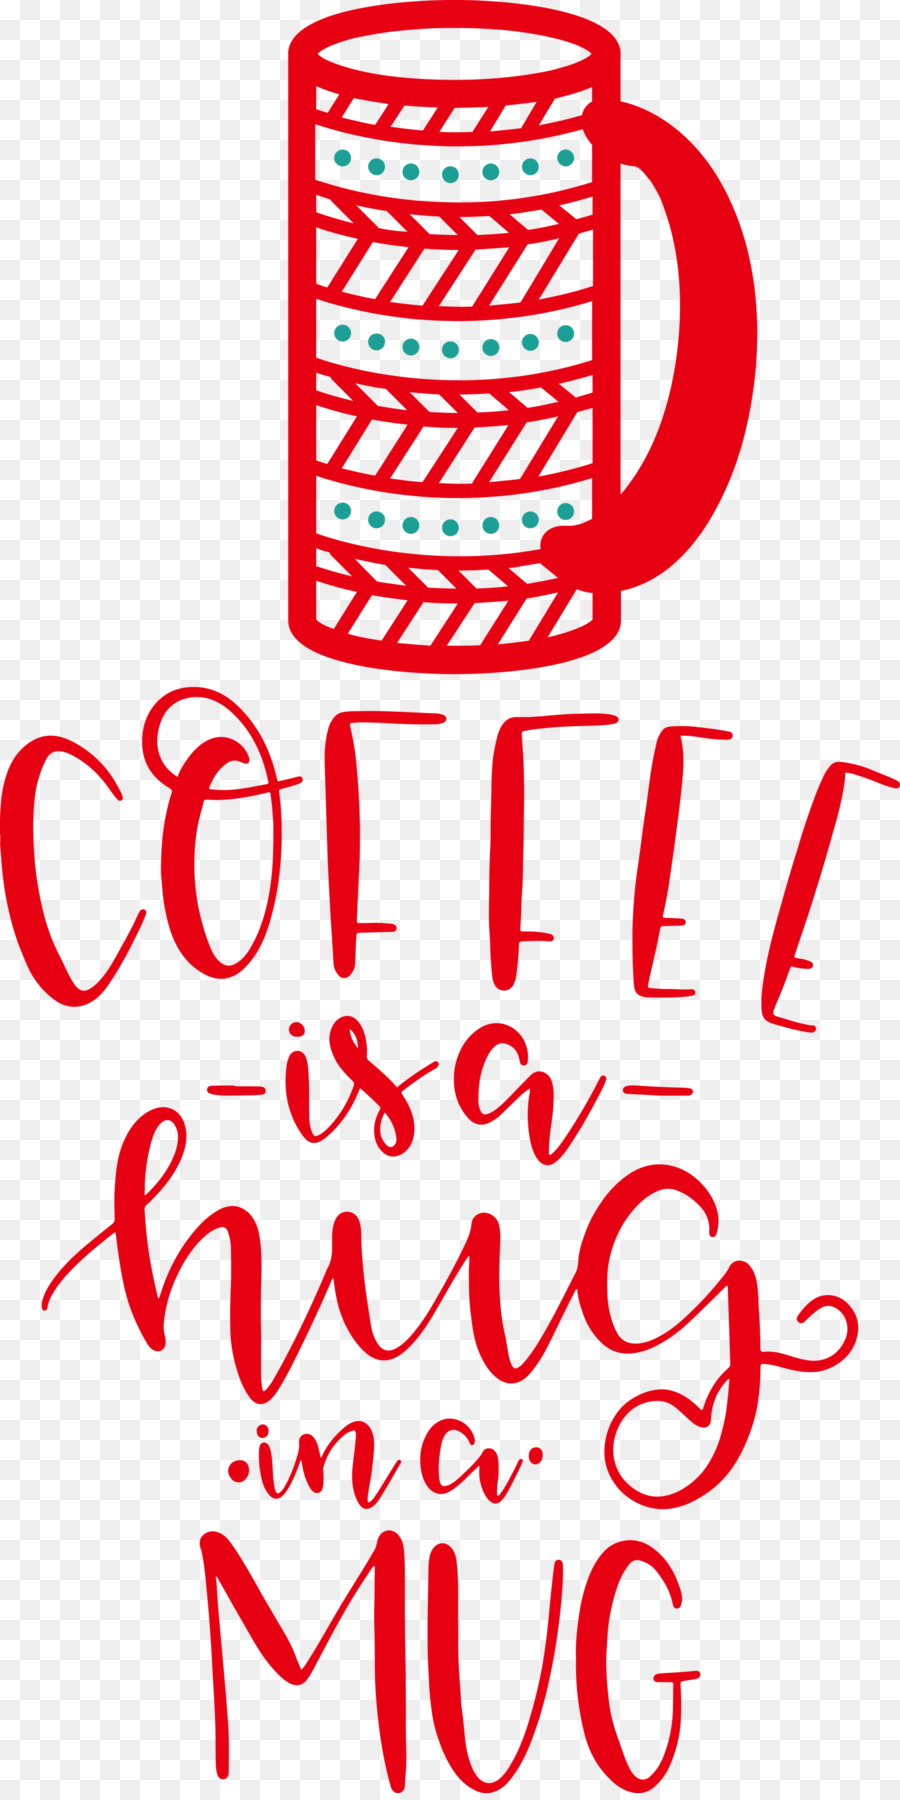 Coffee Is A Hug In A Mug Coffee